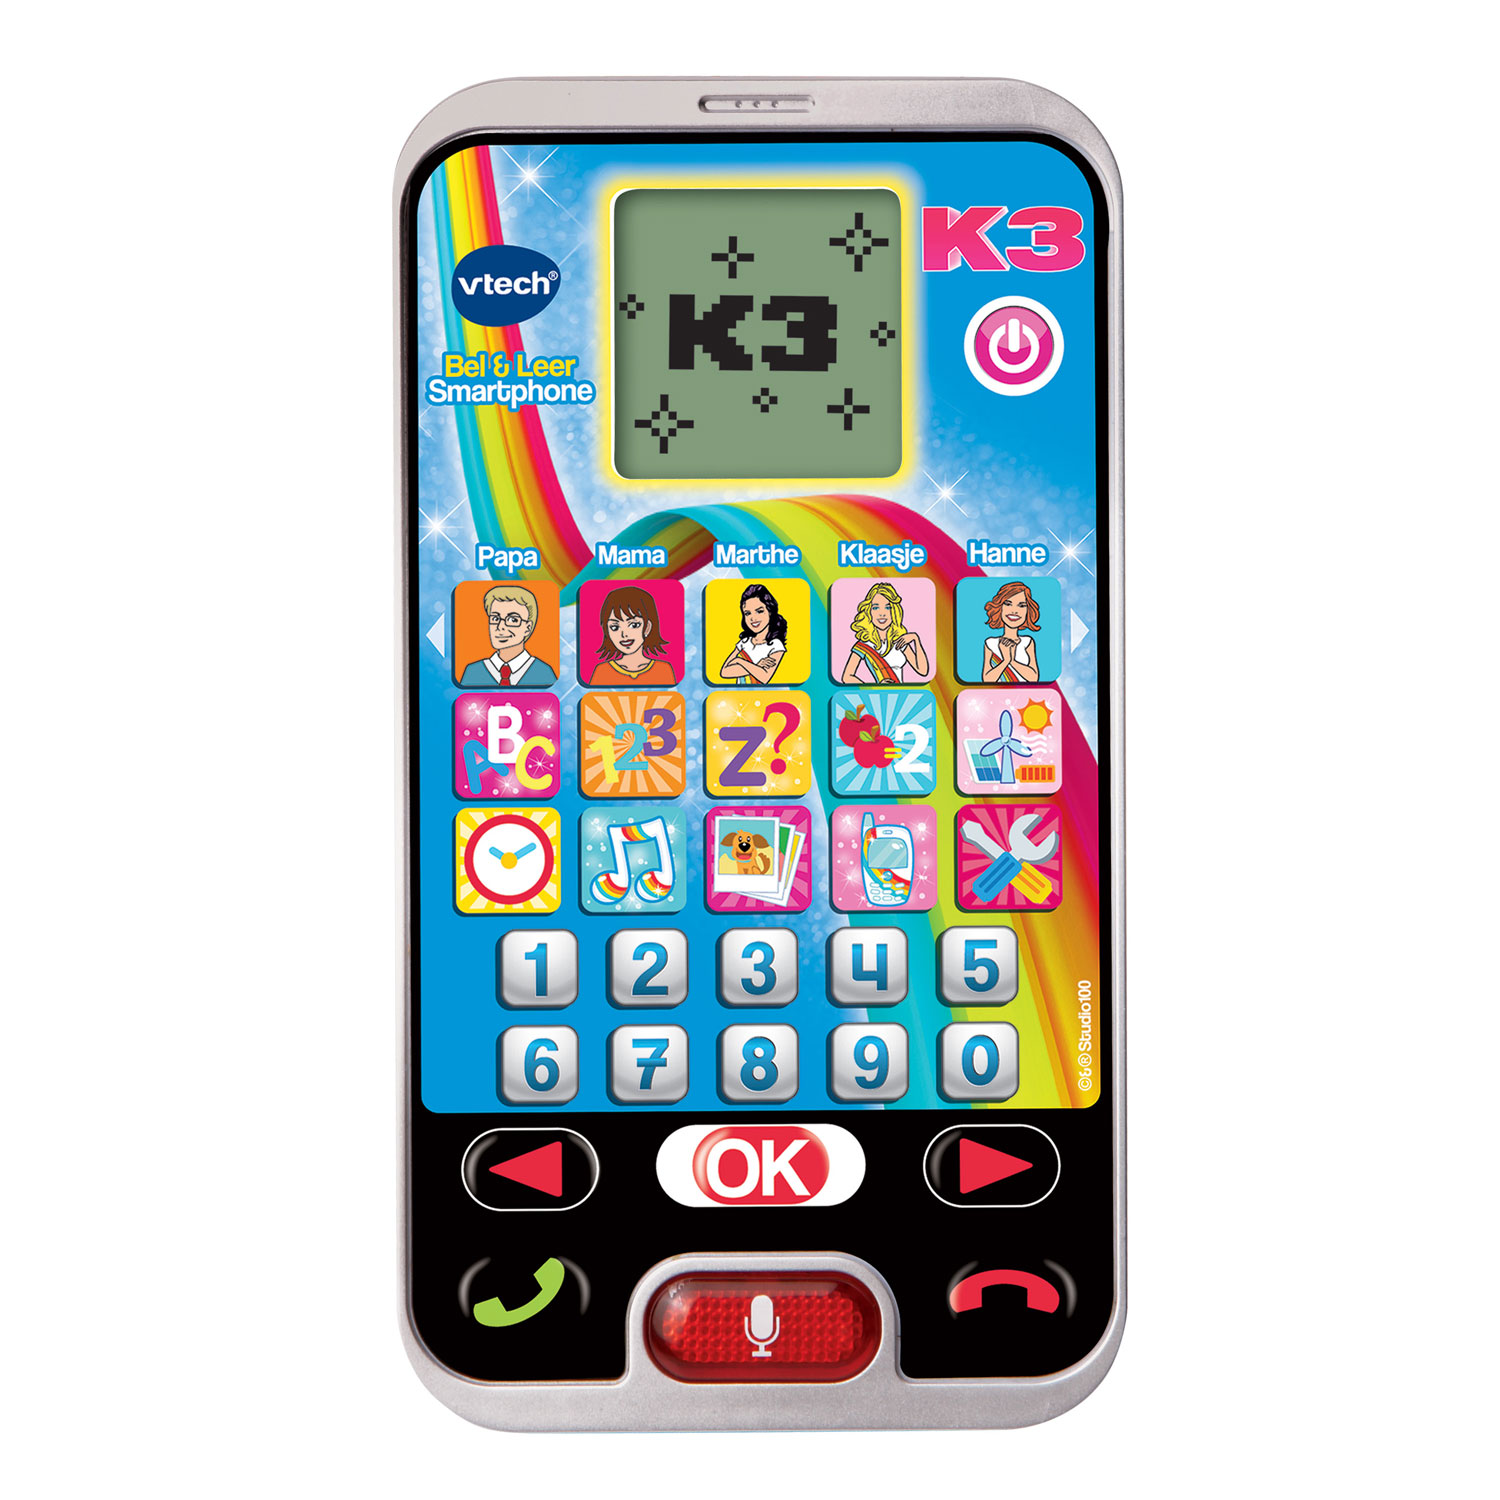 VTech K3 - Bel & Leer Smartphone